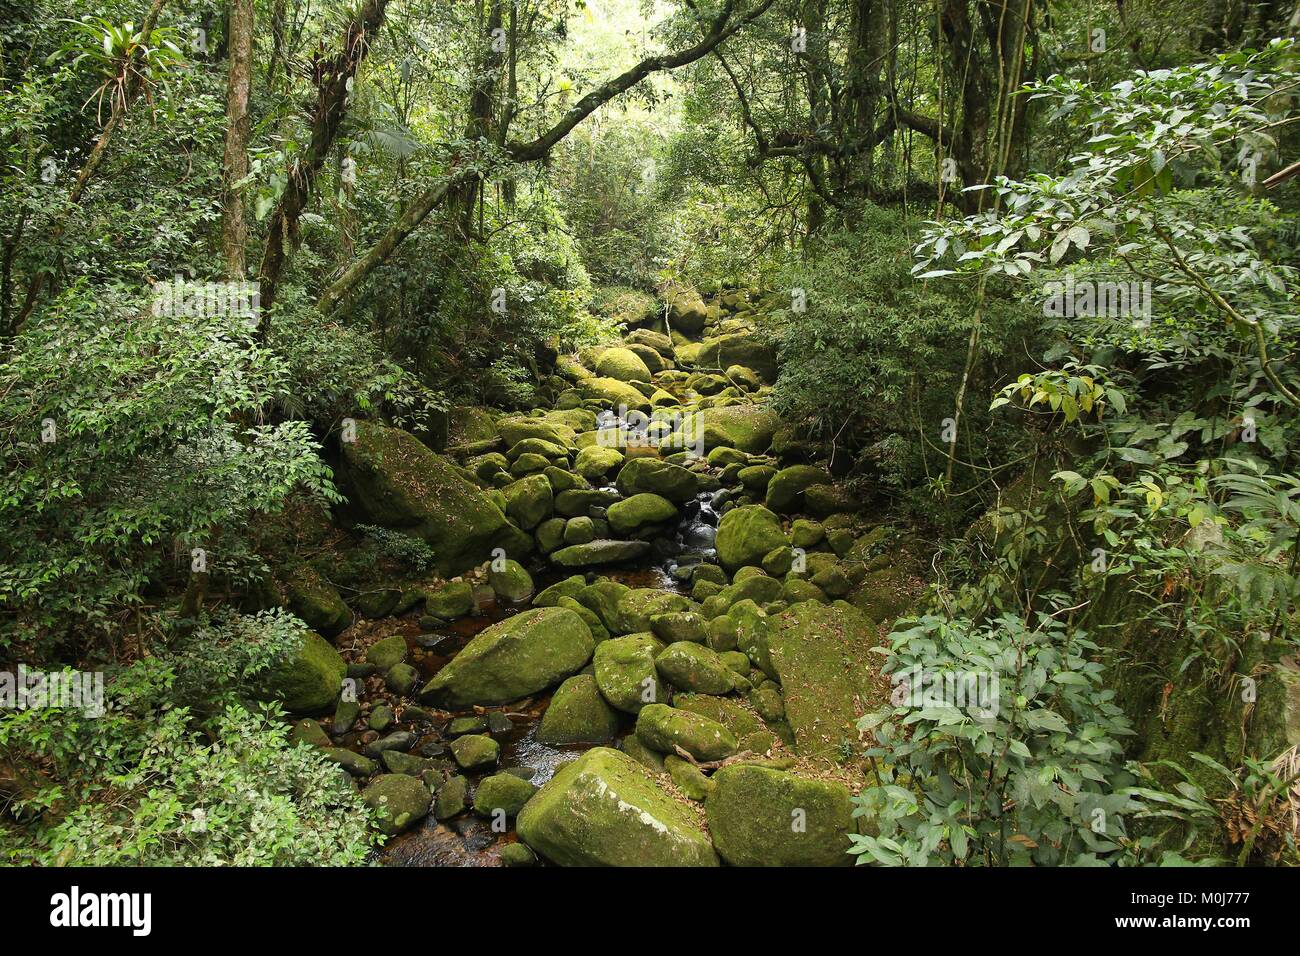 Brésil - jungle vue dans la forêt atlantique (Mata Atlantica) de l'écosystème dans le Parc National de la Serra dos Orgaos (état de Rio de Janeiro). Banque D'Images